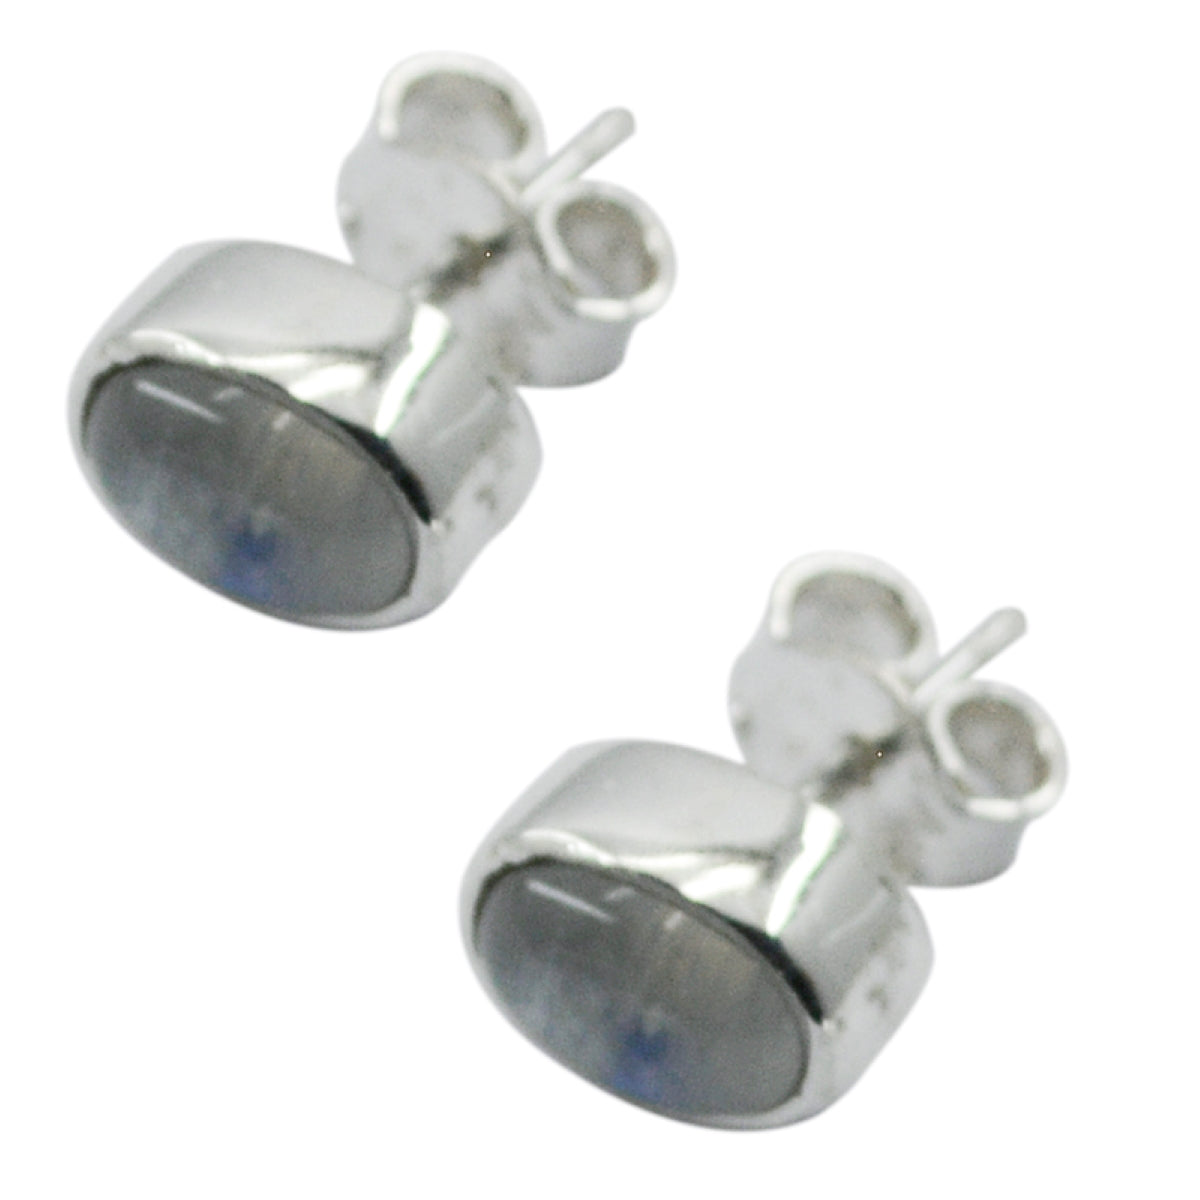 Riyo Nice Gemstone oval Cabochon White Rainbow Moonstone Silver Earrings gift for anniversary